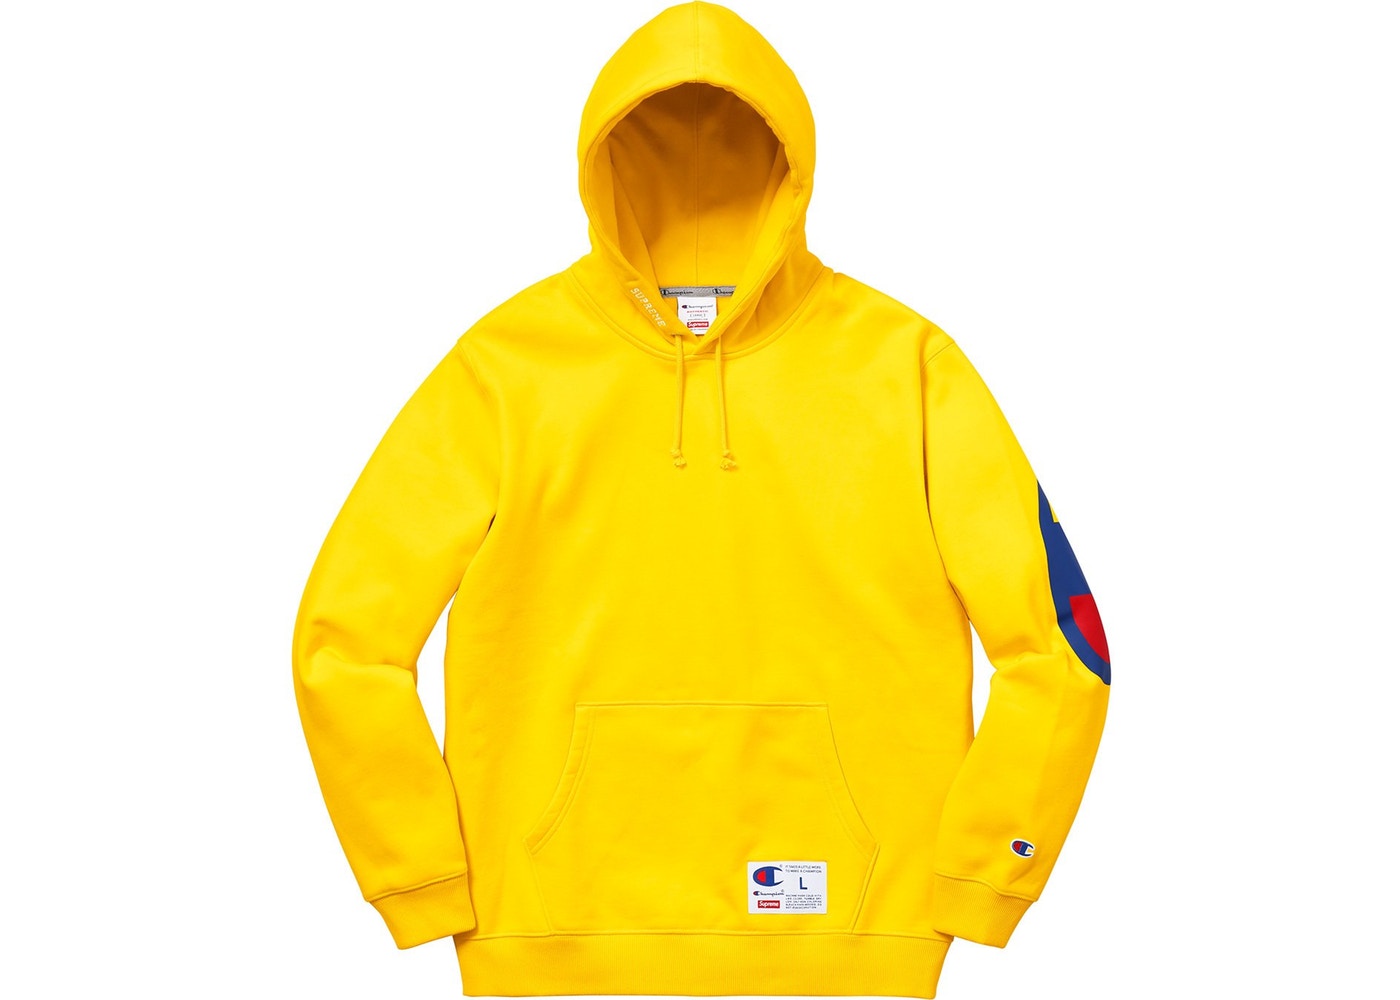 supreme x champion hoodie yellow